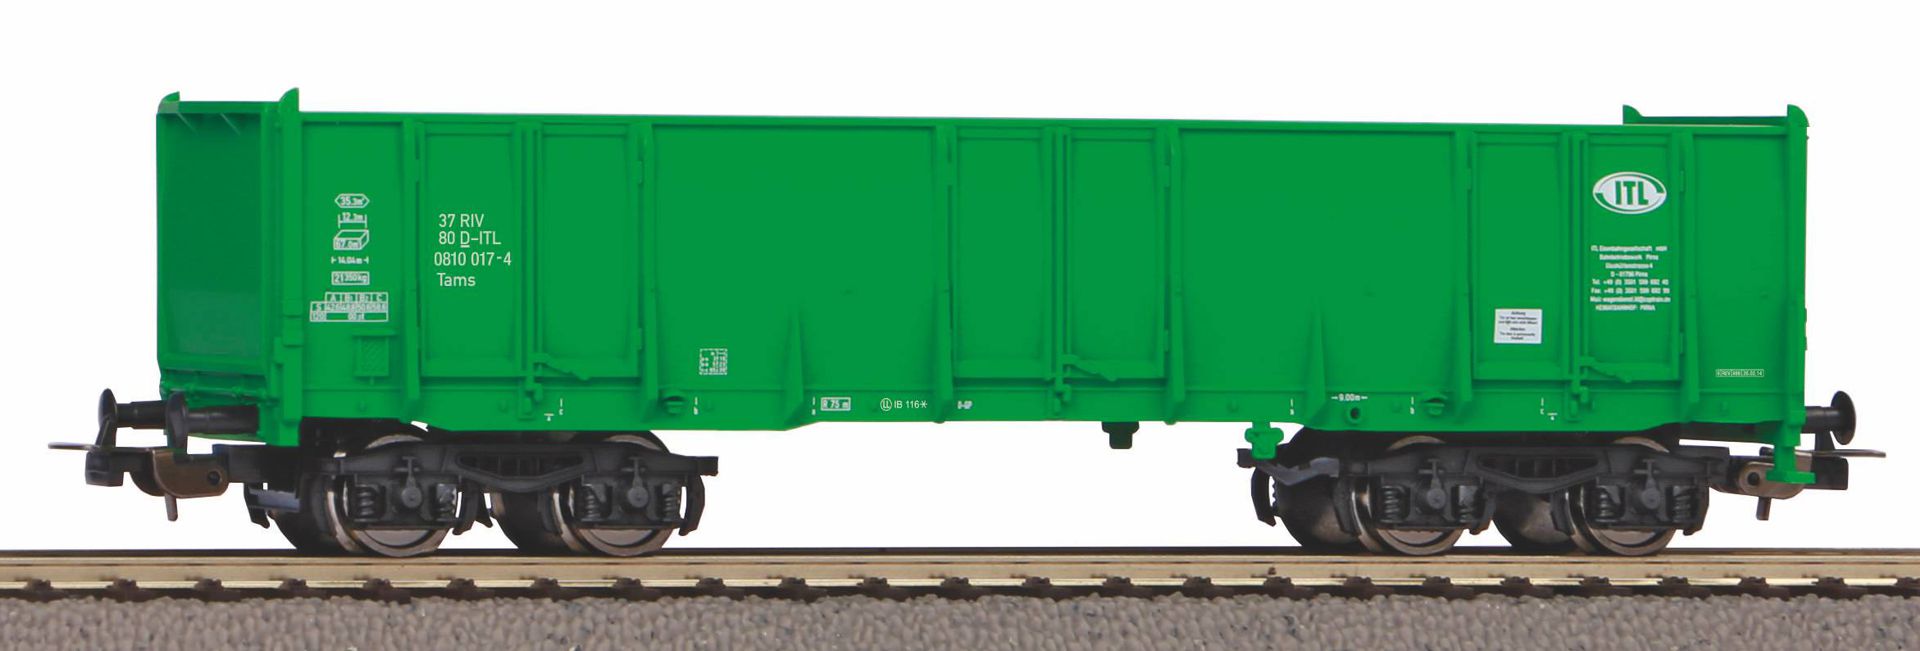 Piko 98546-C3 - Hochbordwagen Eaos , grün, ITL, Ep.VI, Betriebsnummer 3